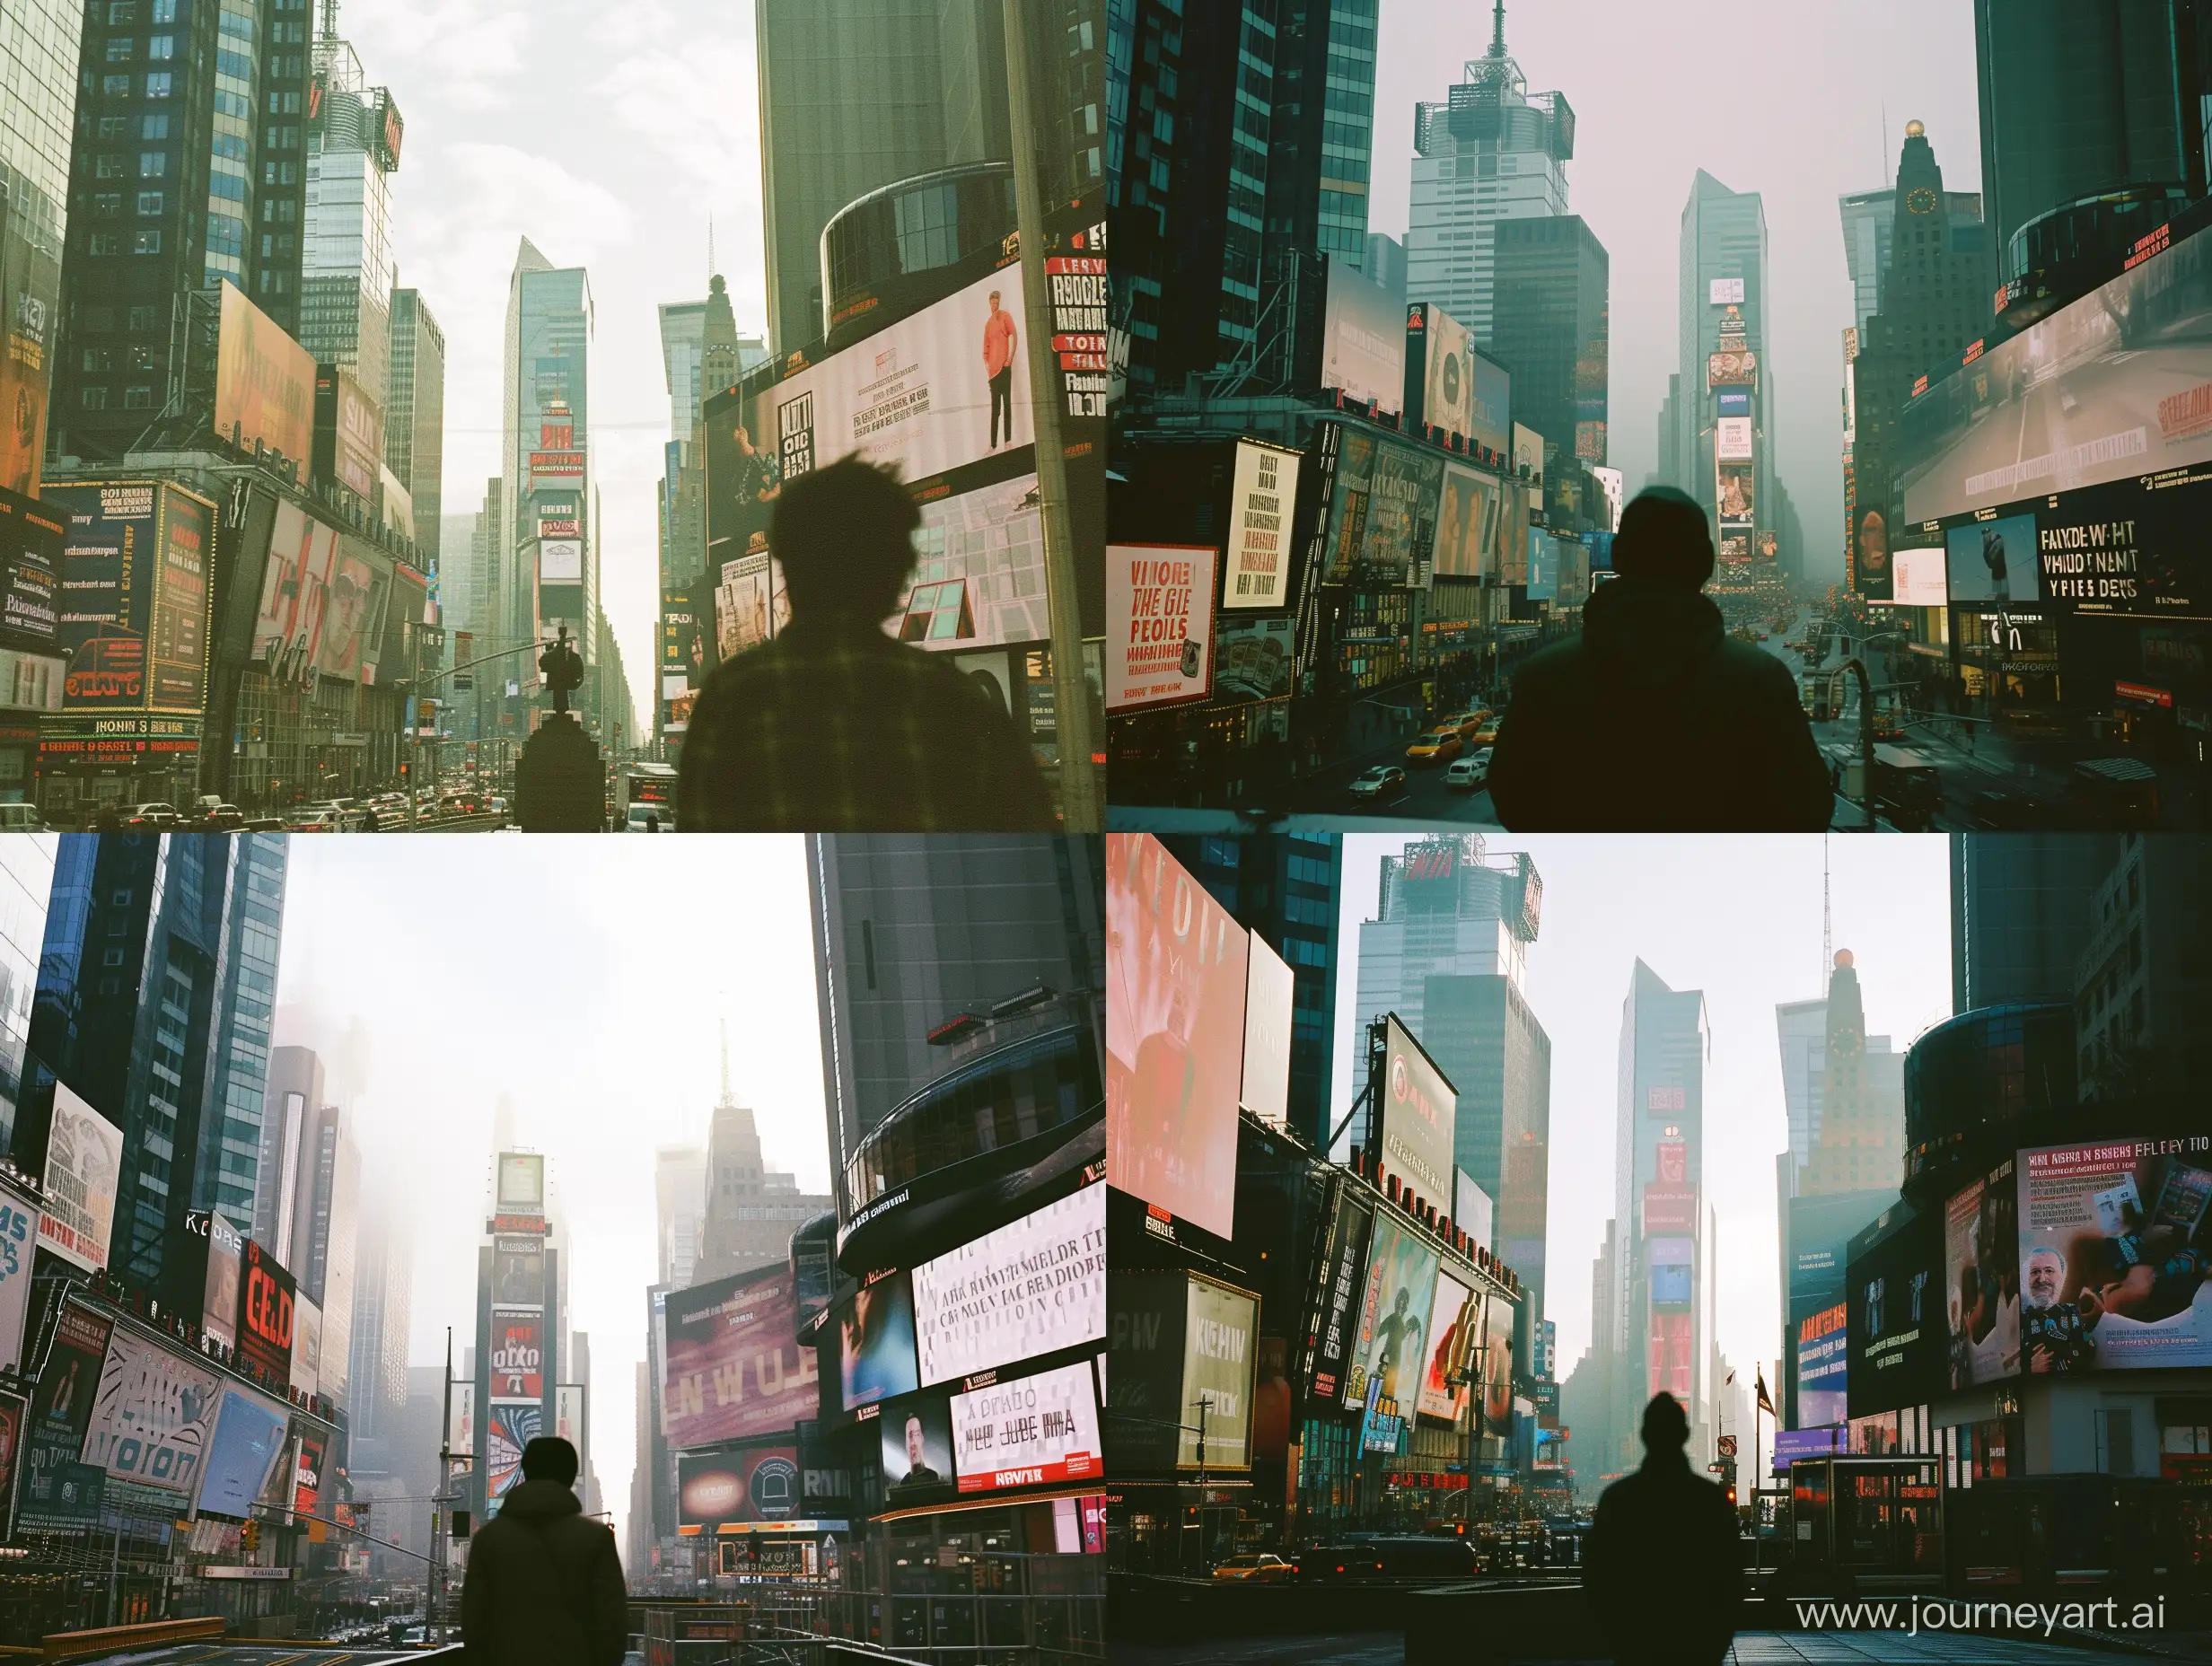 Raw-Kodak-Gold-200-Film-Photo-Vibrant-Times-Square-Scene-in-NYC